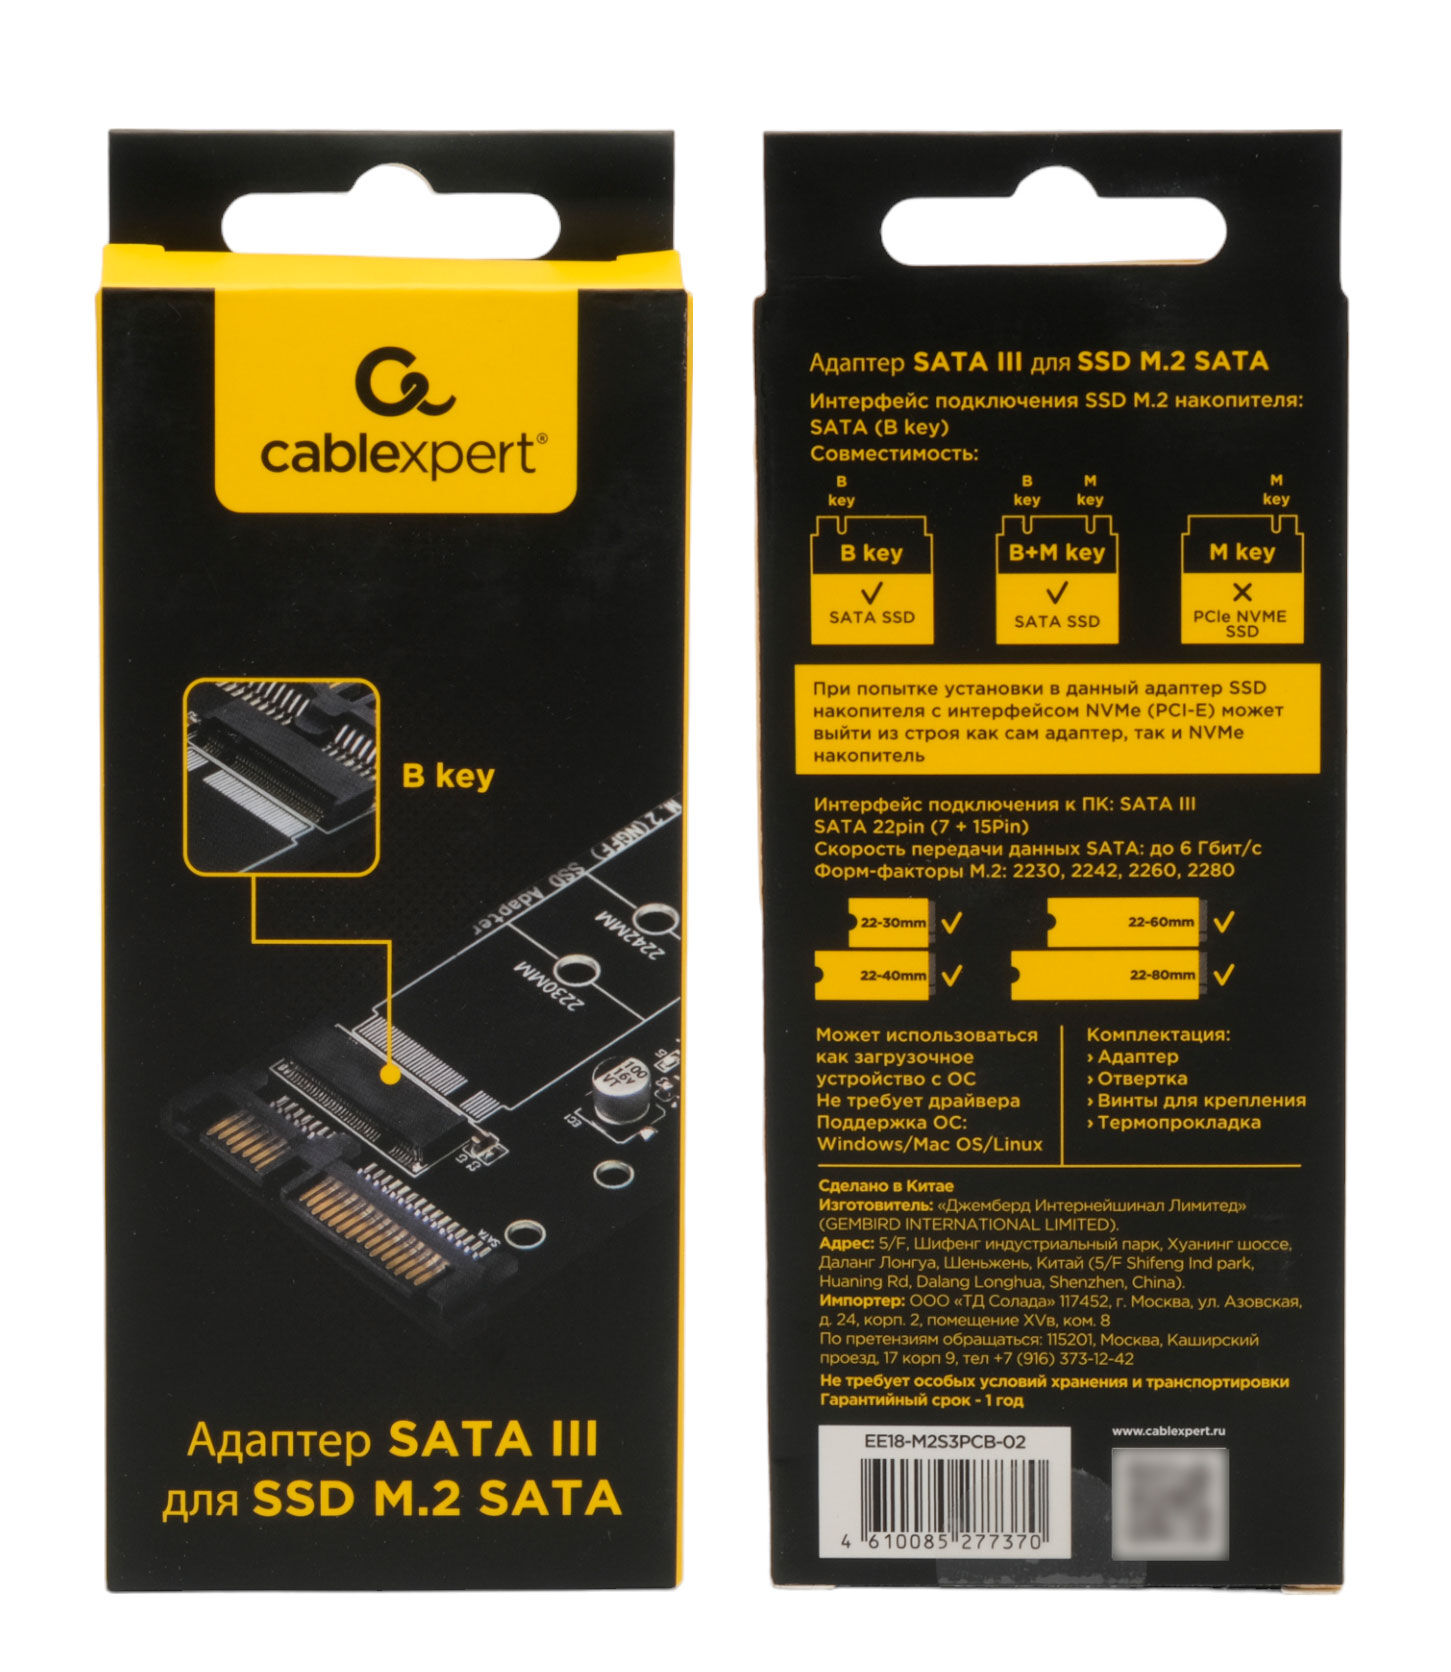 Адаптер для SSD M.2 SATA в разъем SATA EE18-M2S3PCB-02 Cablexpert 4